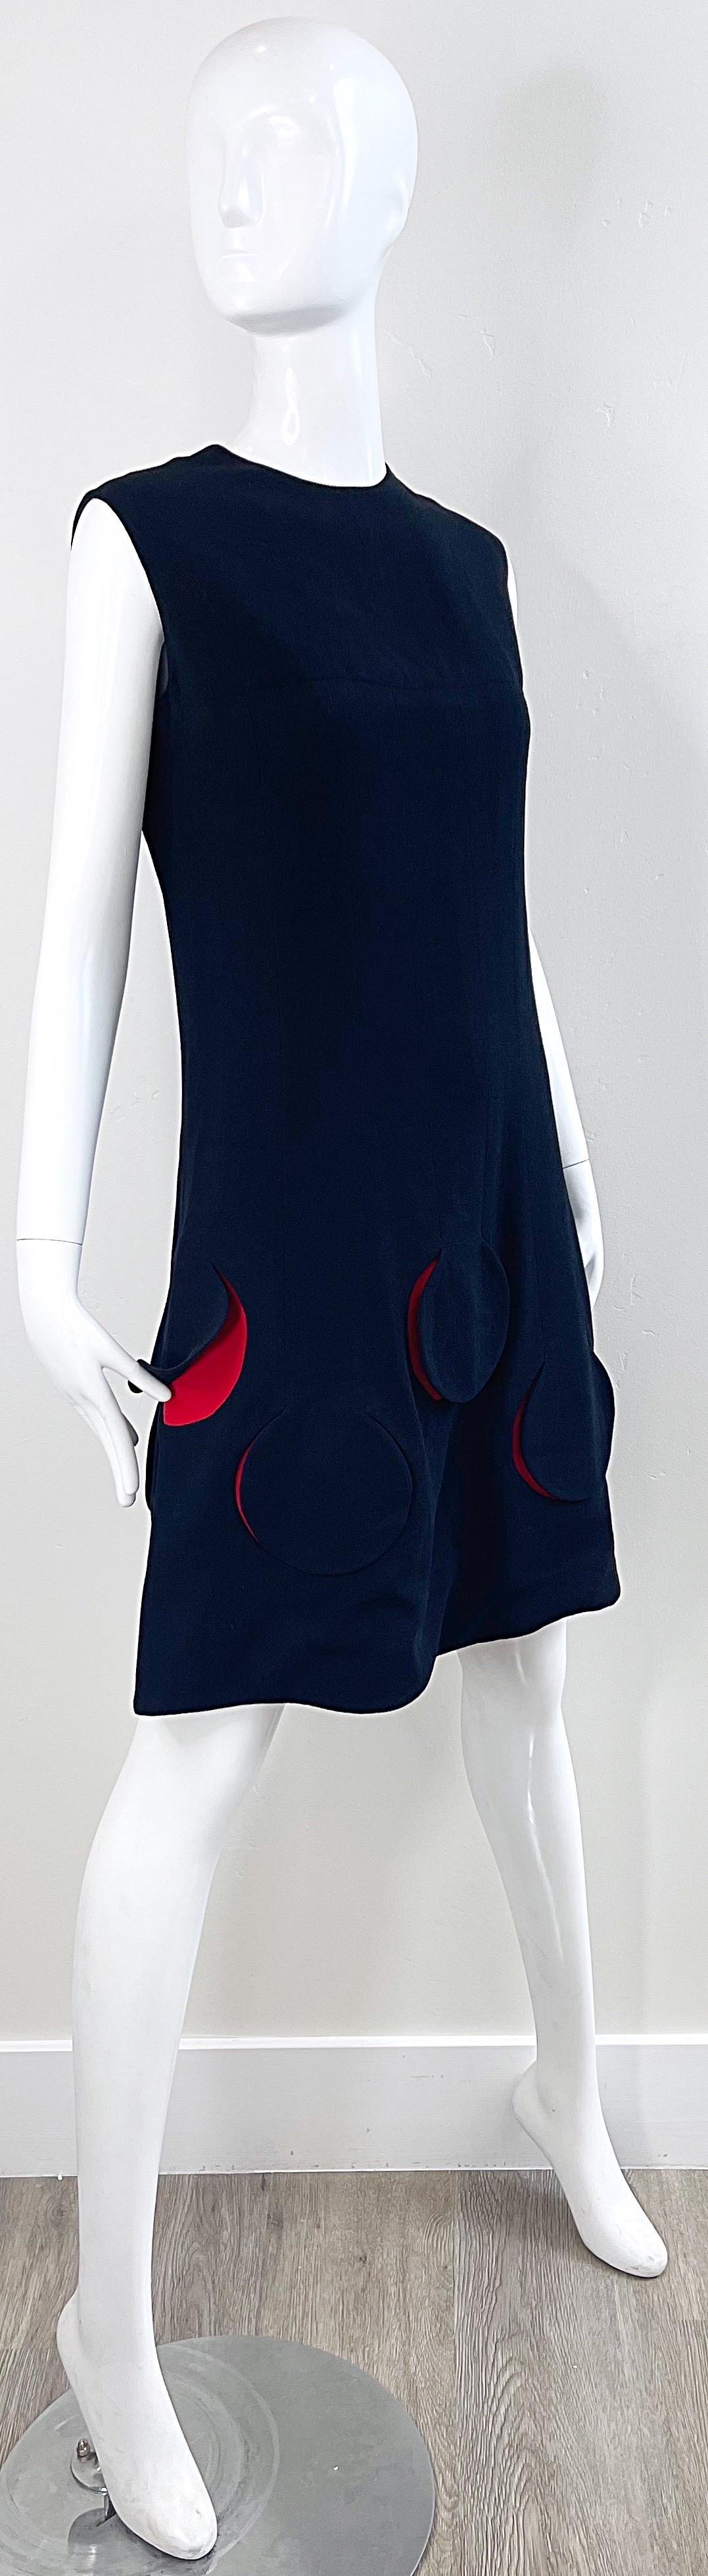 Mod 1960s Pierre Cardin Space Age Black Red Vintage 60s Shift Dress For Sale 6